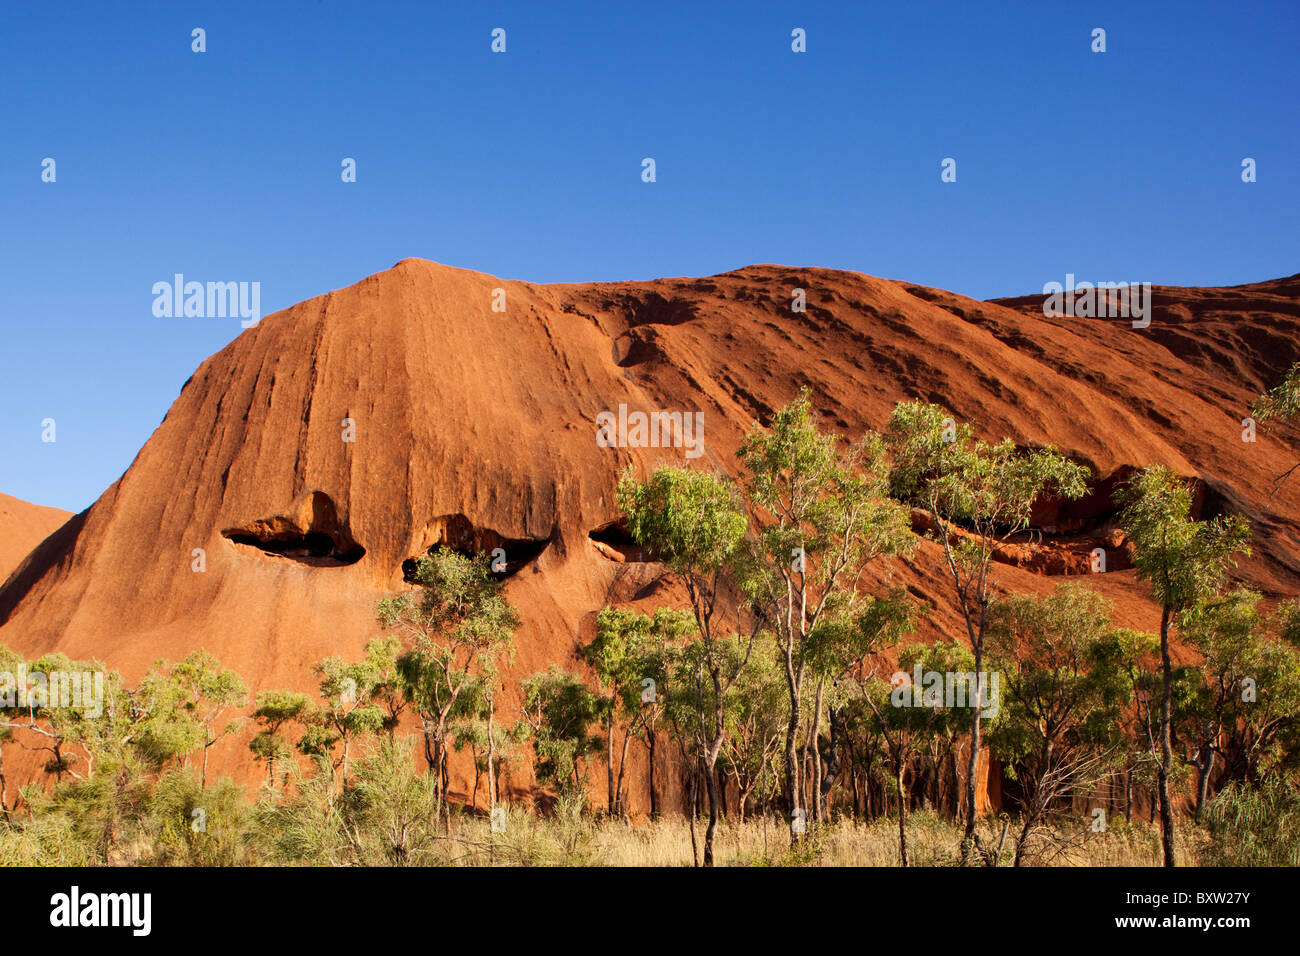 Australien-Northern Territory Uluru - Kata Tjuta National Park Wüste Eiche Bäume an roten Felsen Ayers Rock am Sommermorgen Stockfoto